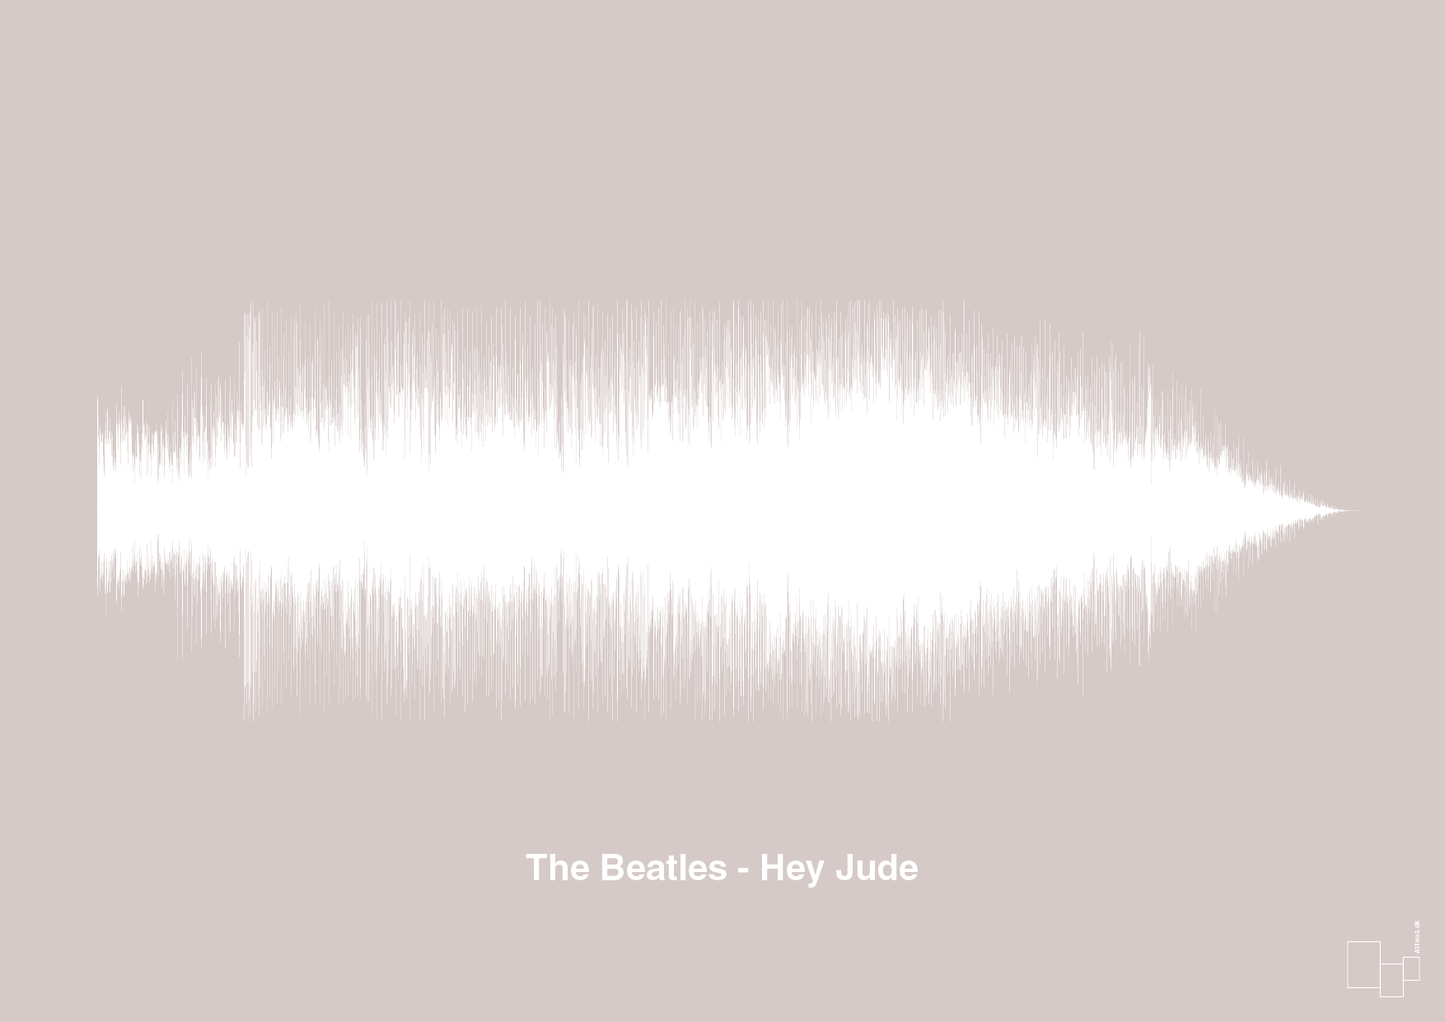 the beatles - hey jude - Plakat med Musik i Broken Beige